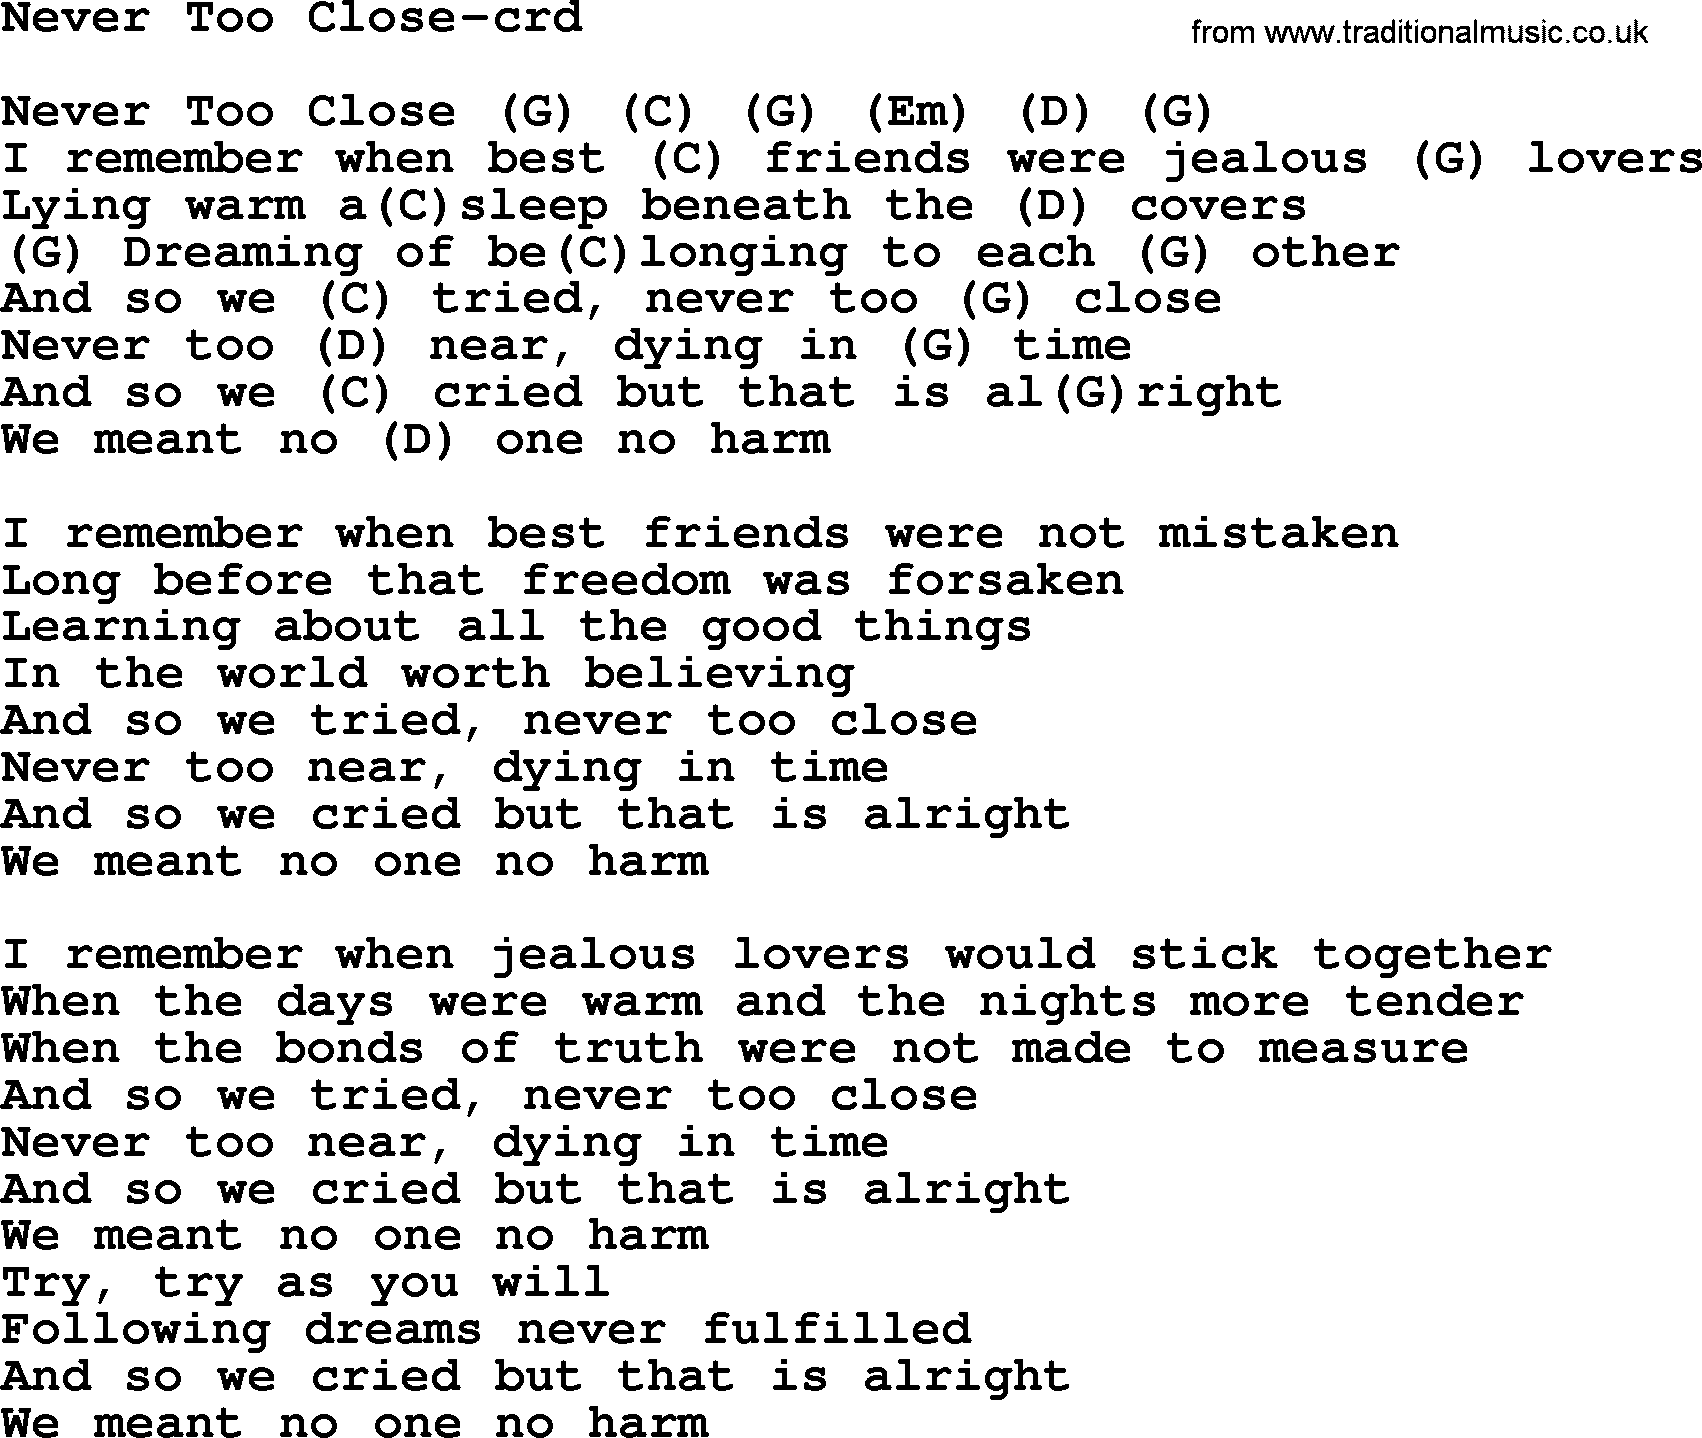 Gordon Lightfoot song Never Too Close, lyrics and chords